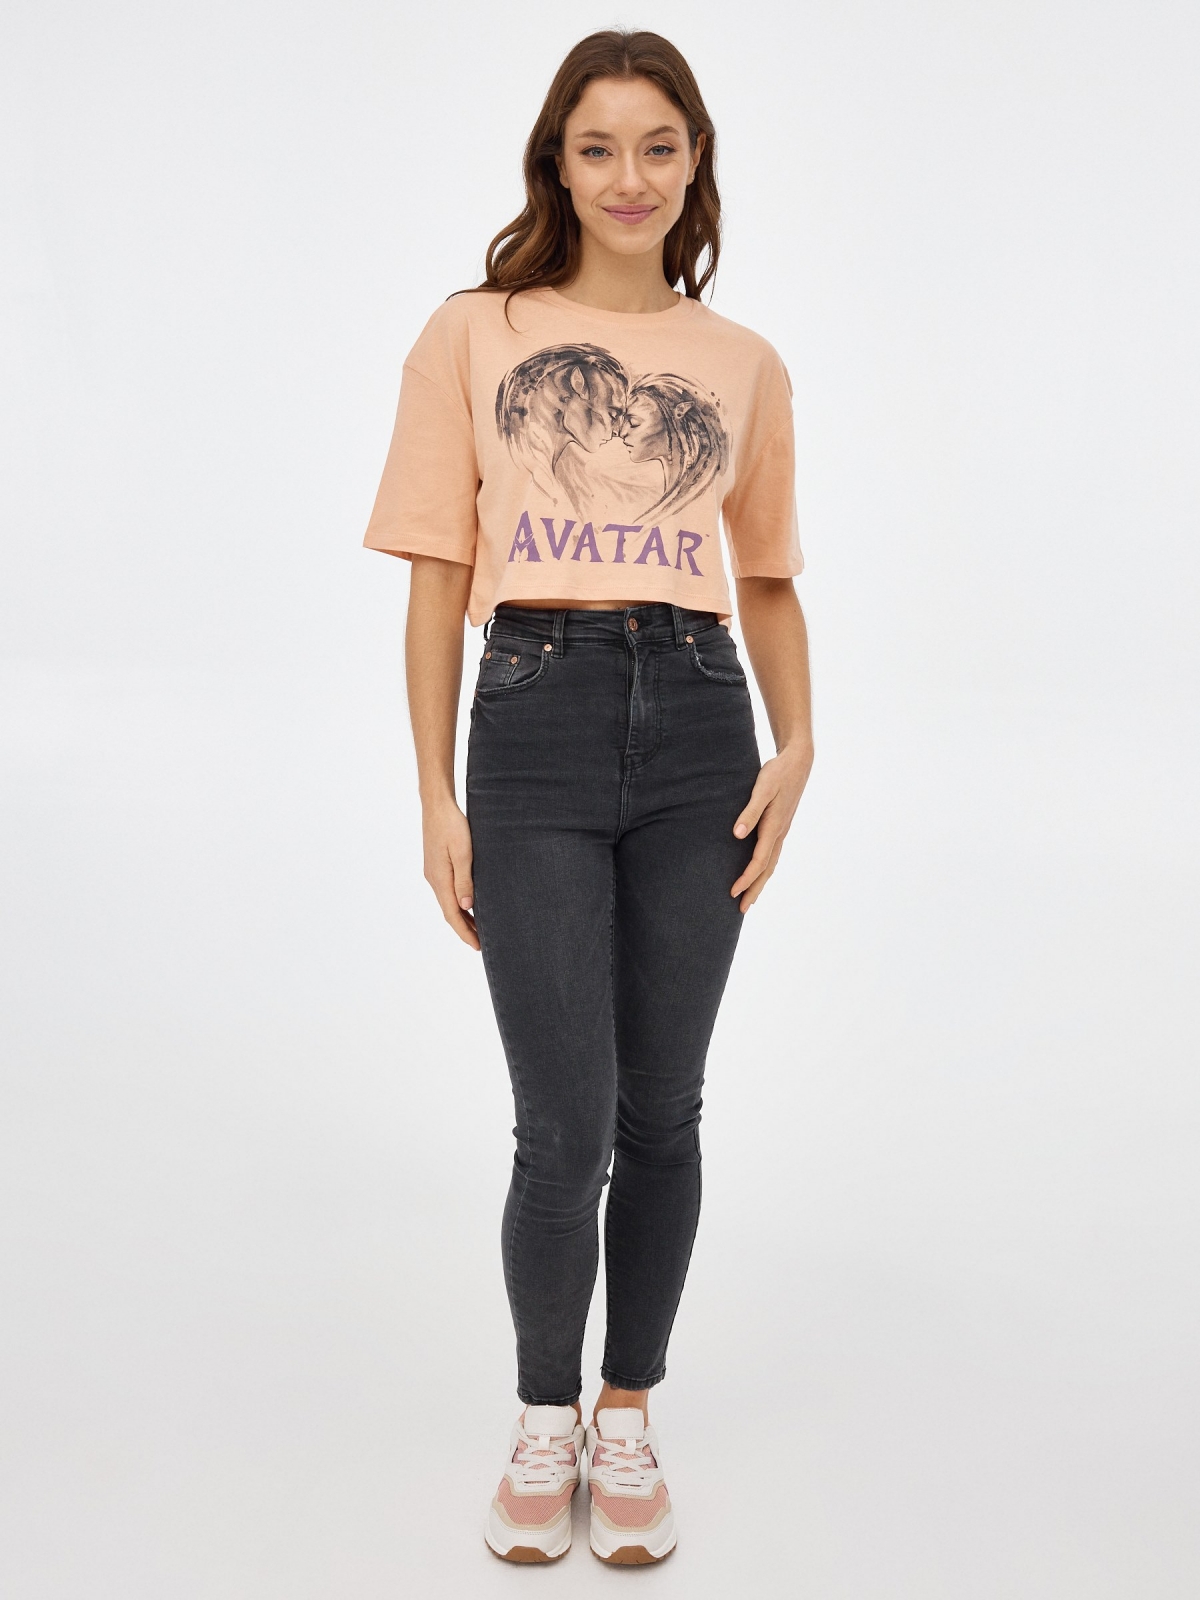 Avatar crop T-shirt peach front view